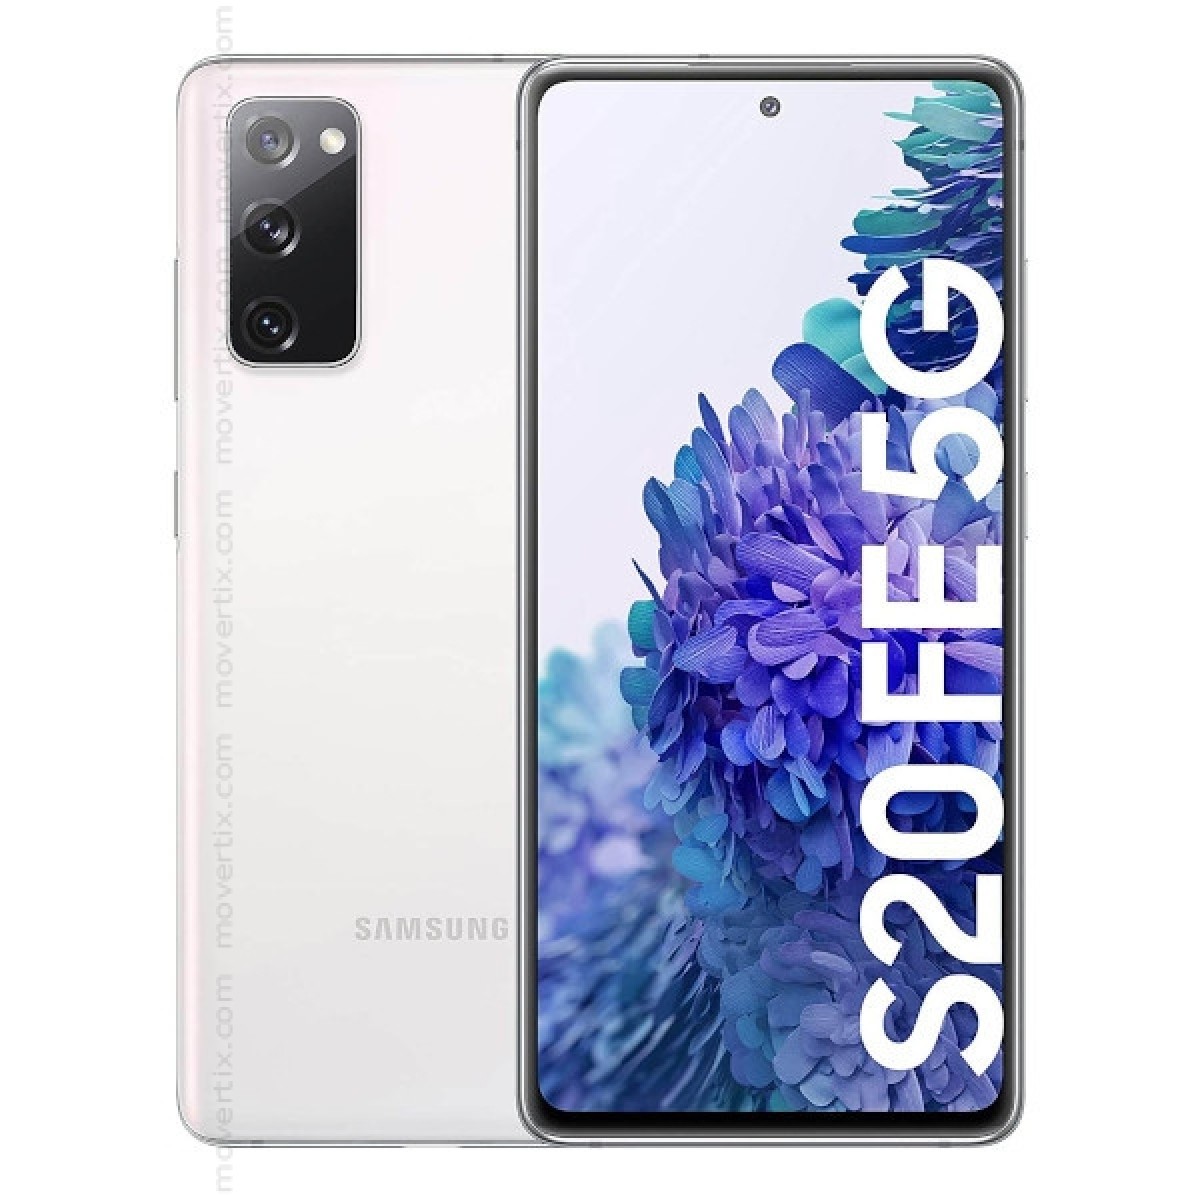 Samsung Galaxy S20 FE 5G Dual SIM Cloud White 128GB and 6GB RAM